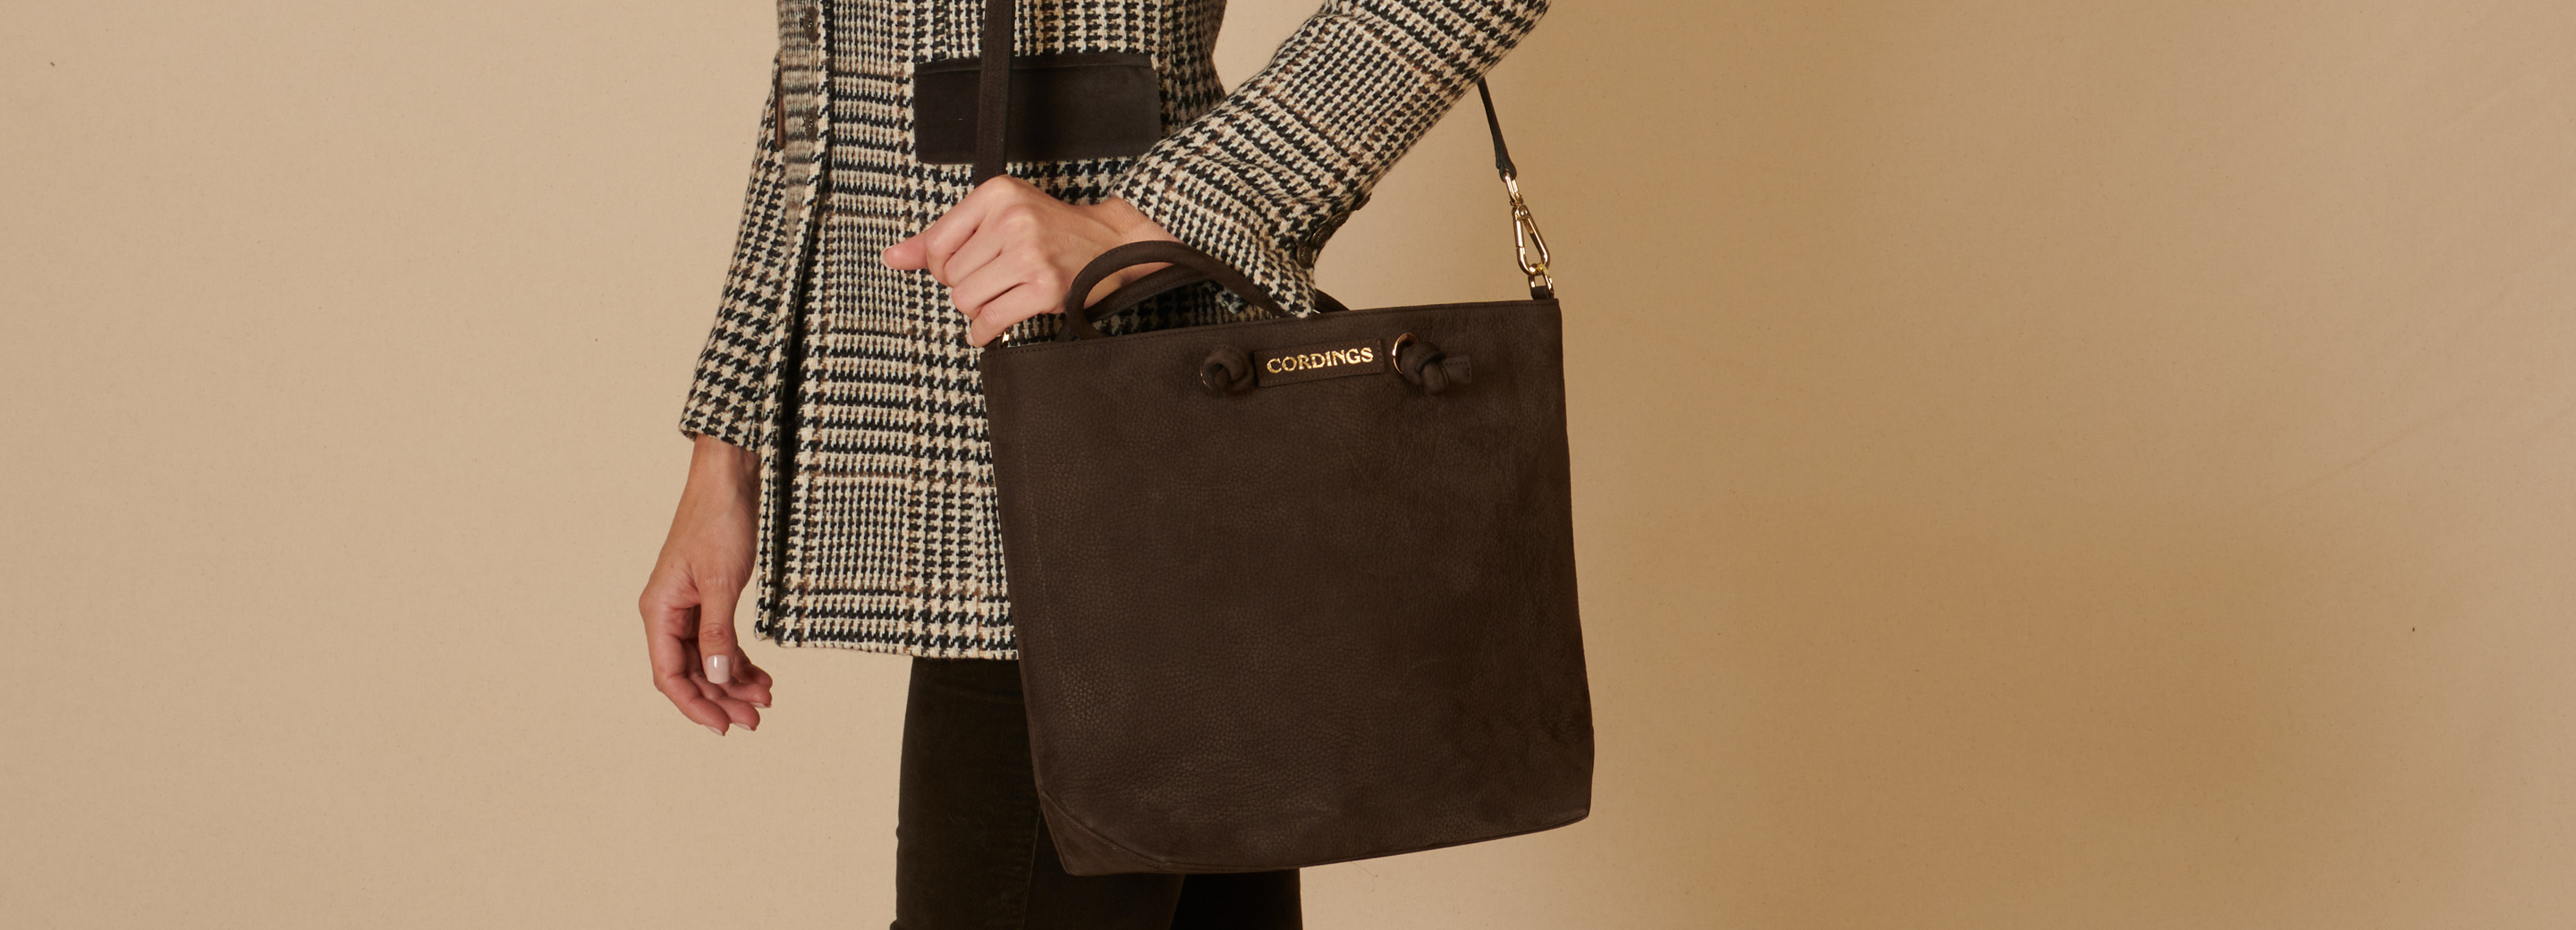 Ladies Leather and British Handbags